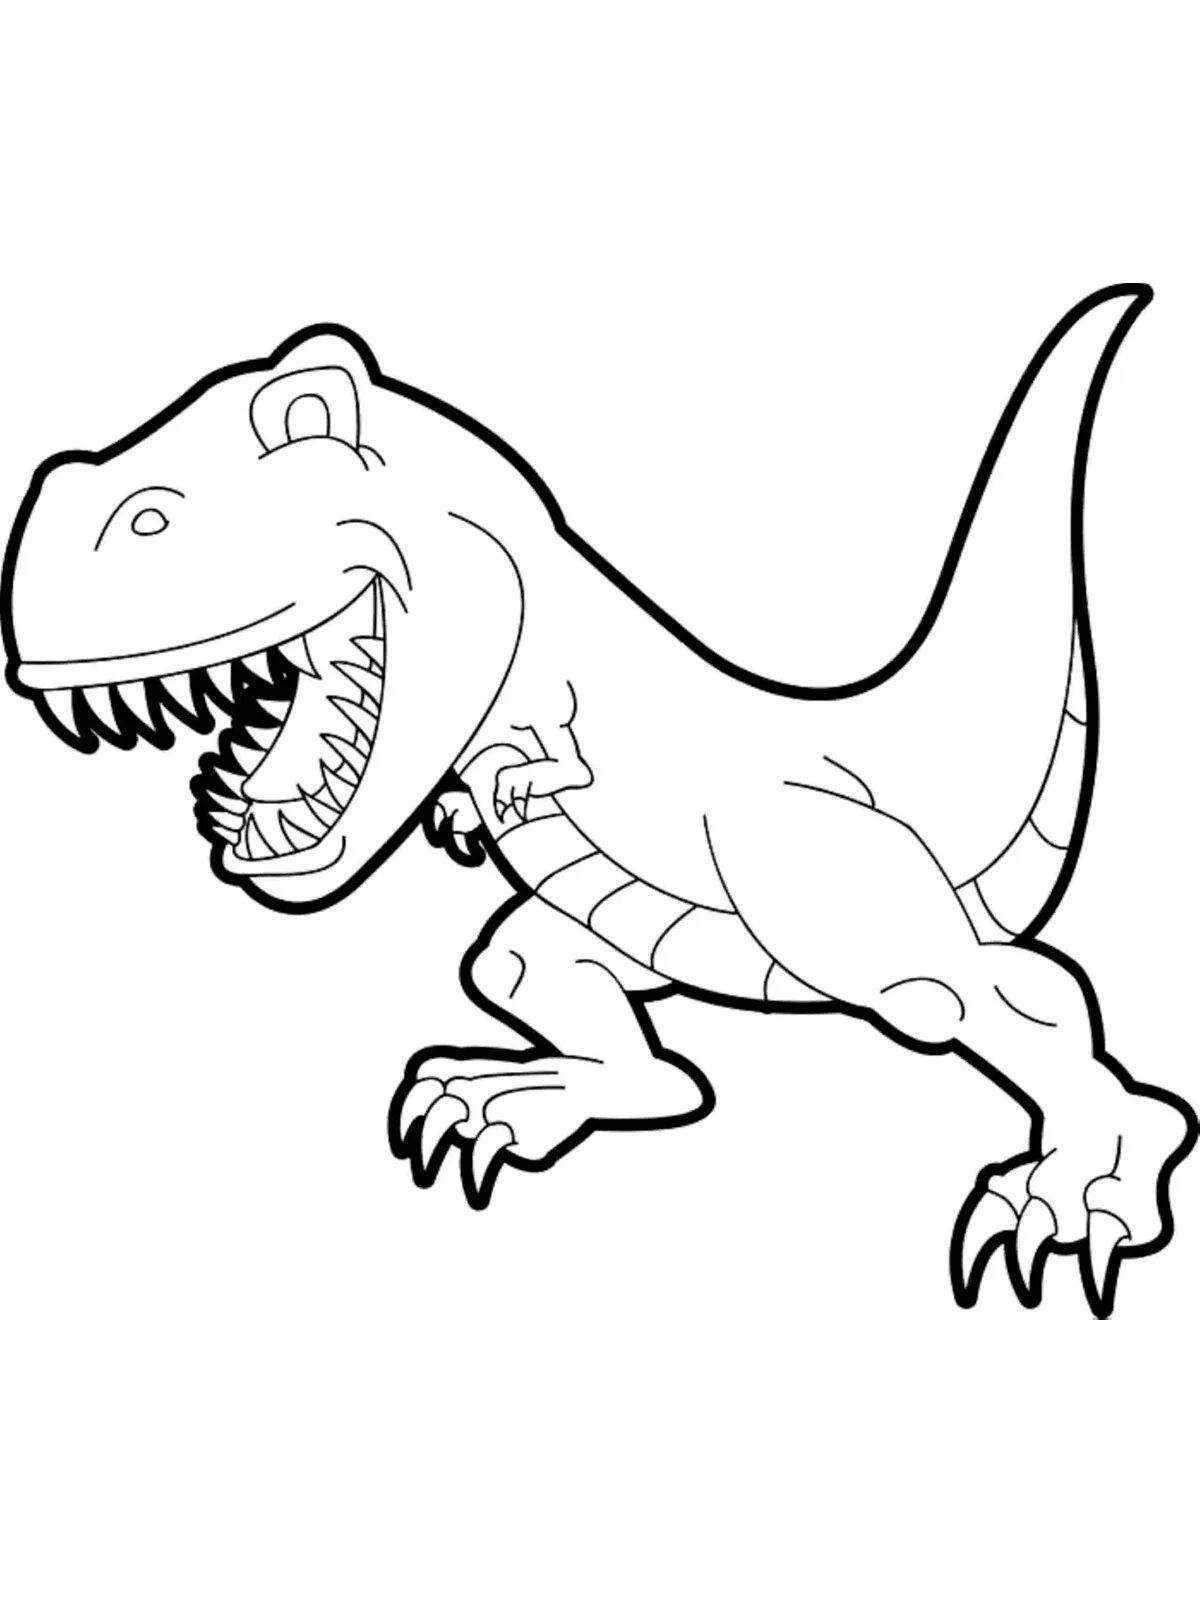 Dinosaur fun coloring book